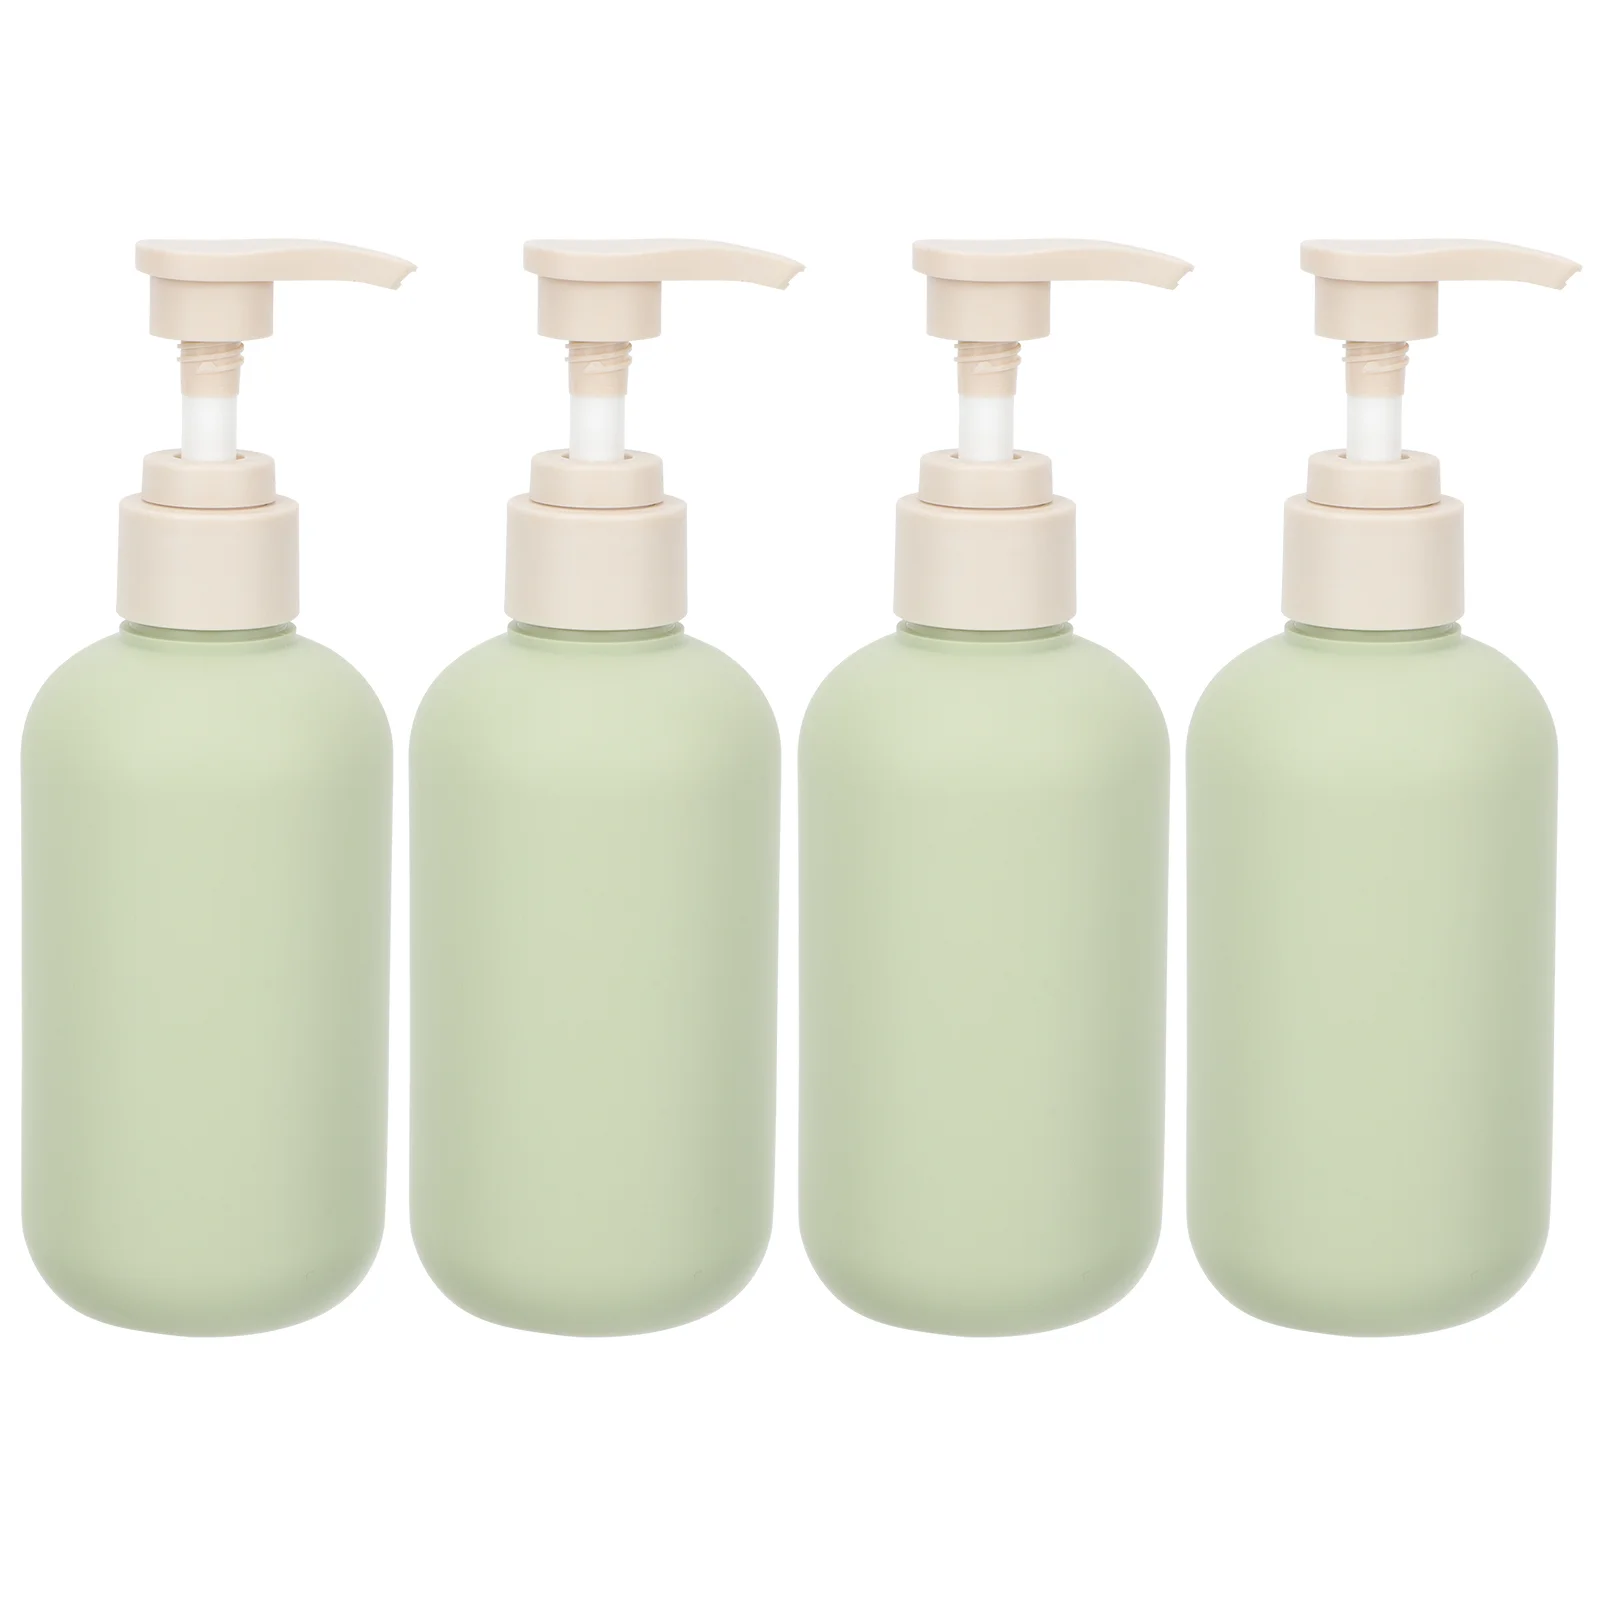 

4 Pcs Shampoo Bottle Liquid Travel Containers Foaming Soap Dispenser Holders Plastic Lotion Sub Bottles Dispensers